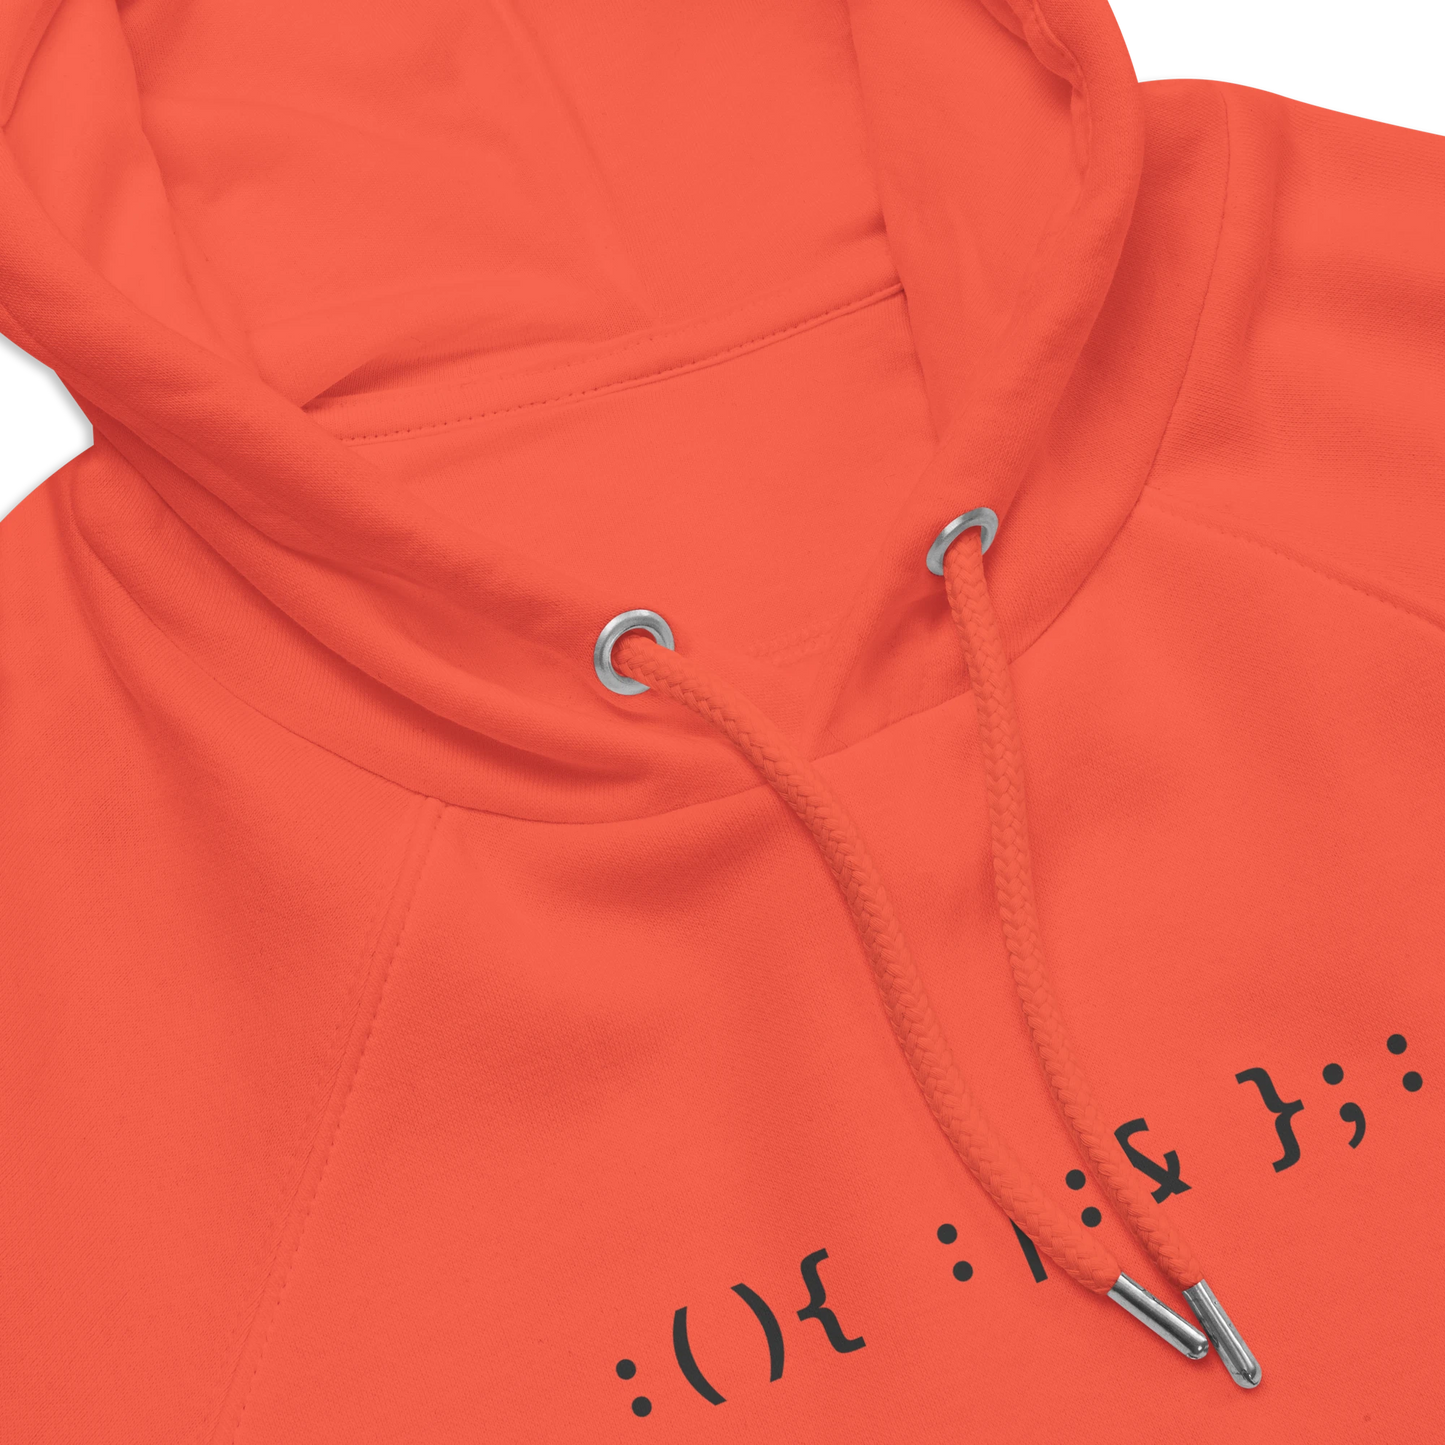 Fork bomb premium hoodie product details product details product details